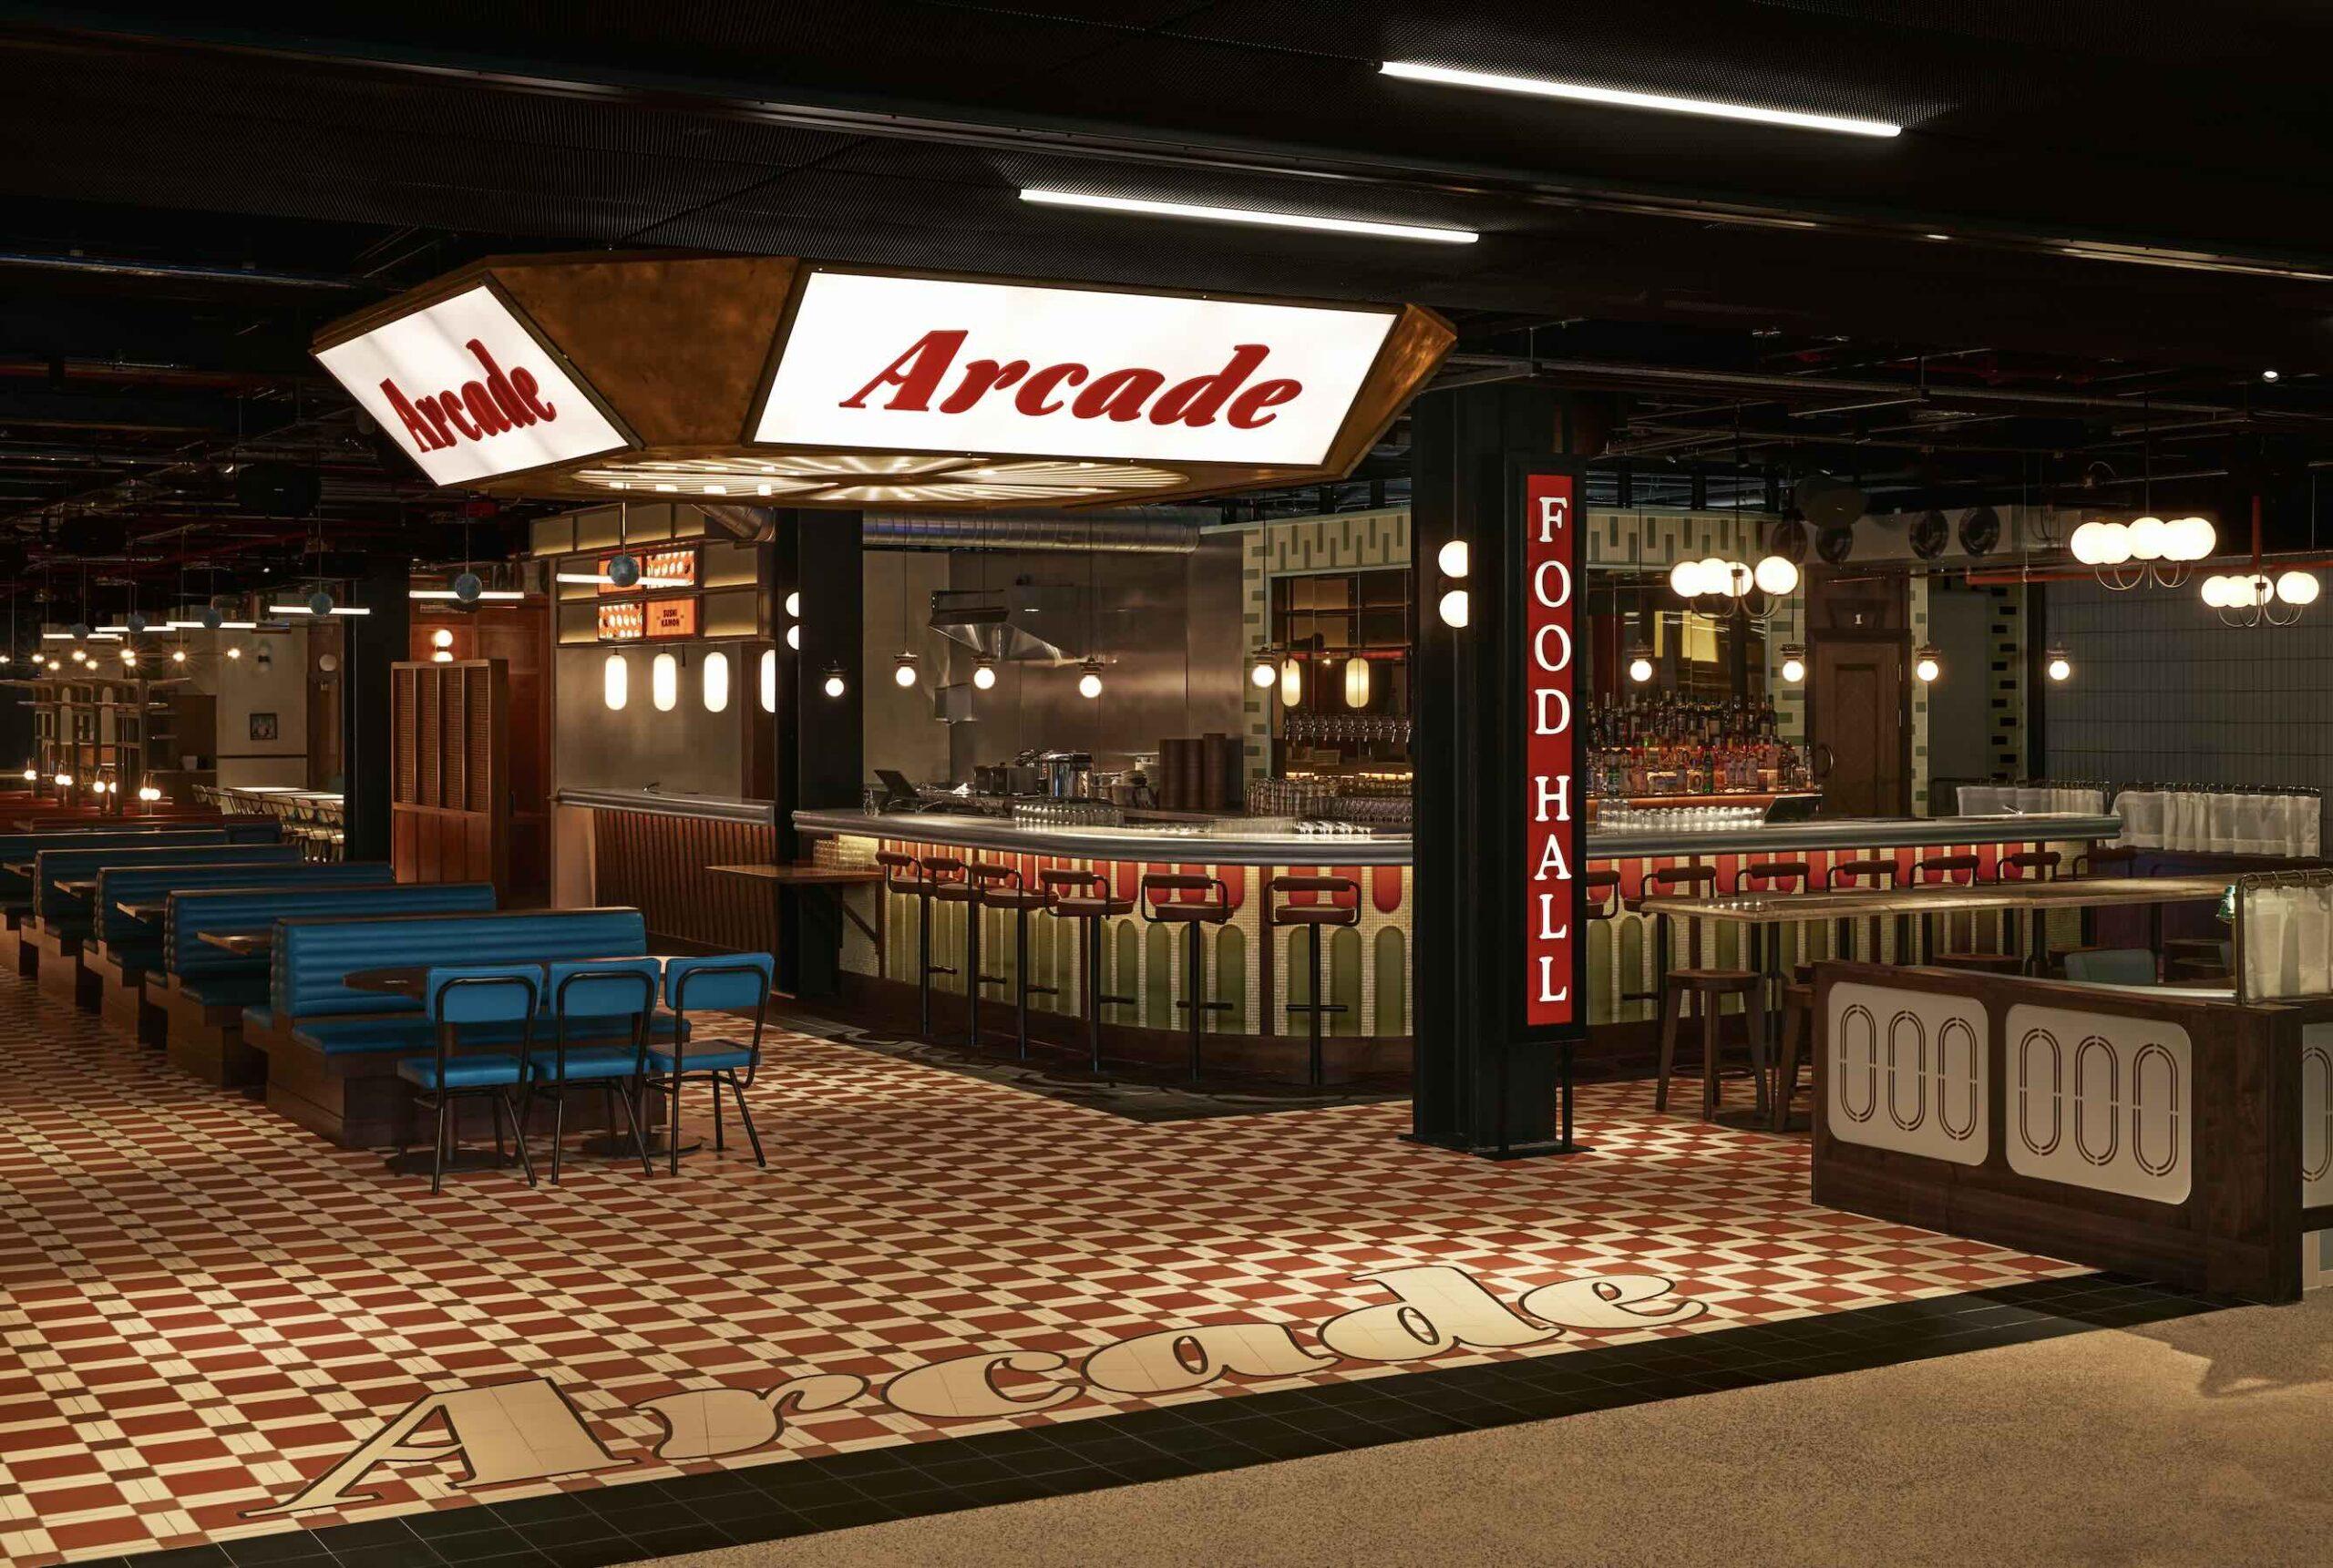 Arcade Food Hall is coming from London to Riyadh